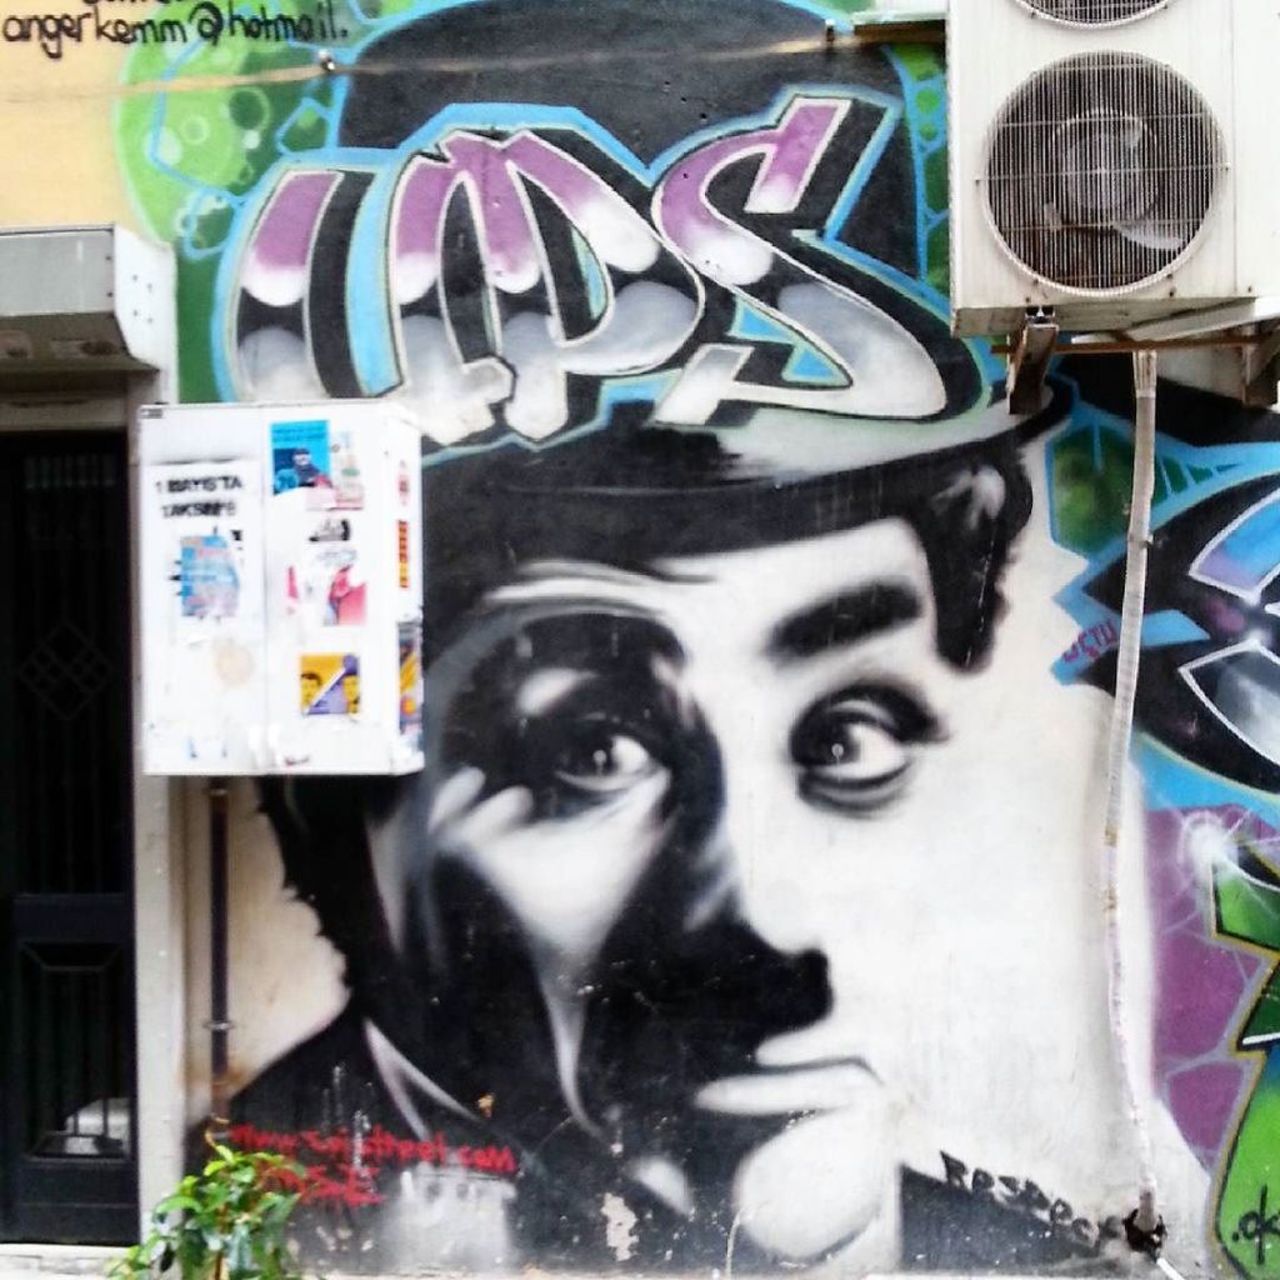 #streetartkadikoy #streetart #graffiti #publicart #urbanart #sokaksanatı #streetartistanbul #istanbulstreetart #gra… https://t.co/hmRm1VgbhK